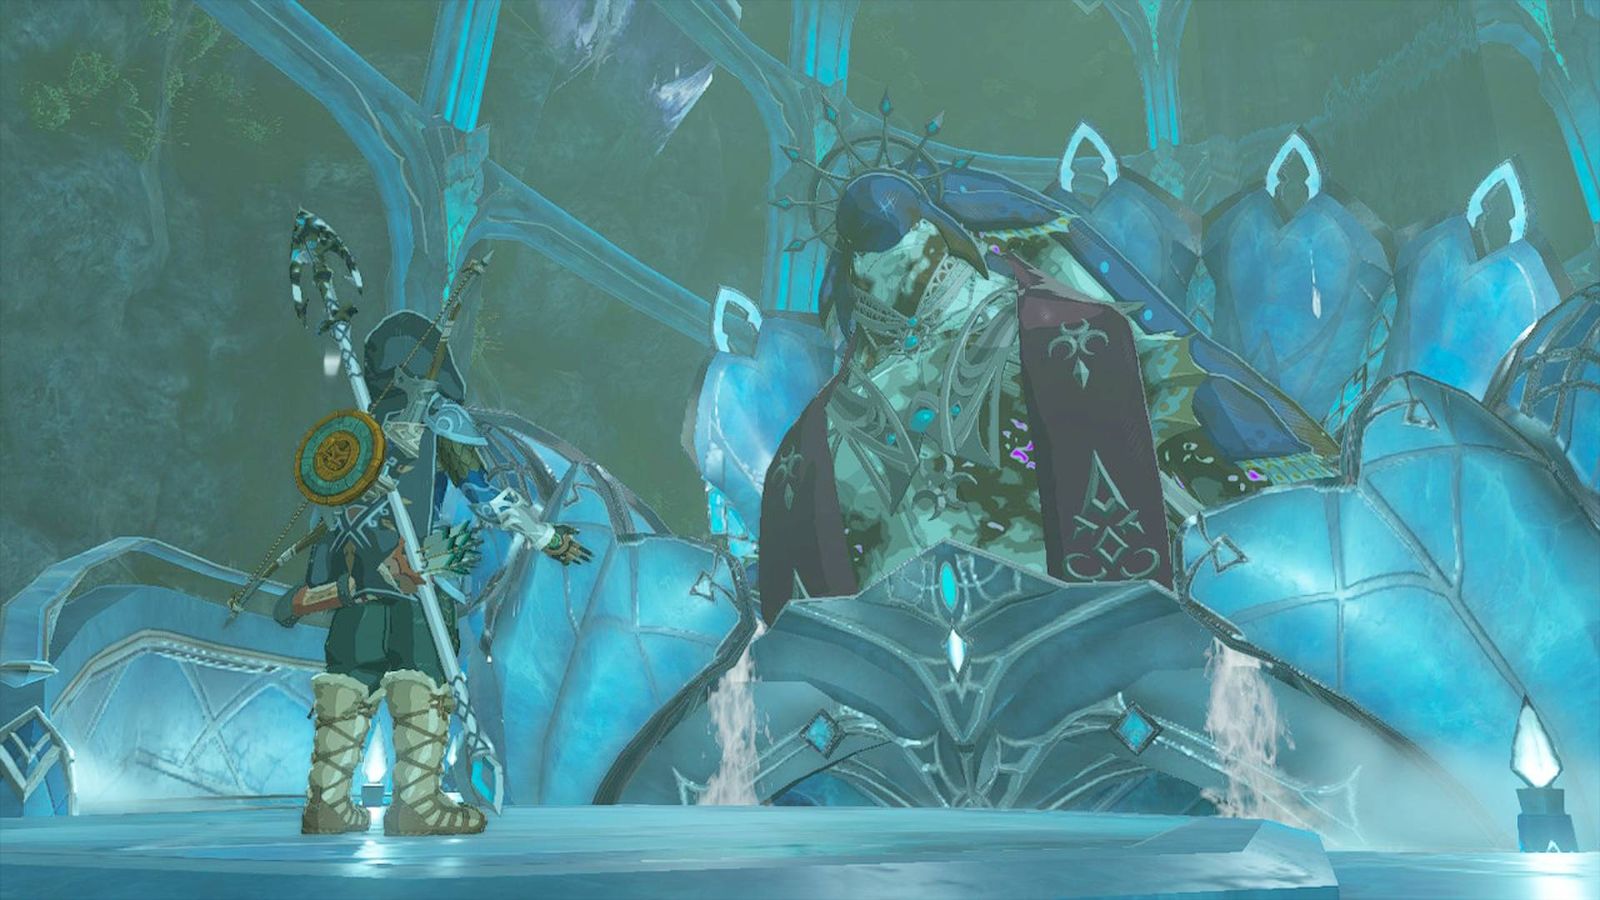 Link speaking to King Dorephan in Zelda Tears of the Kingdom.